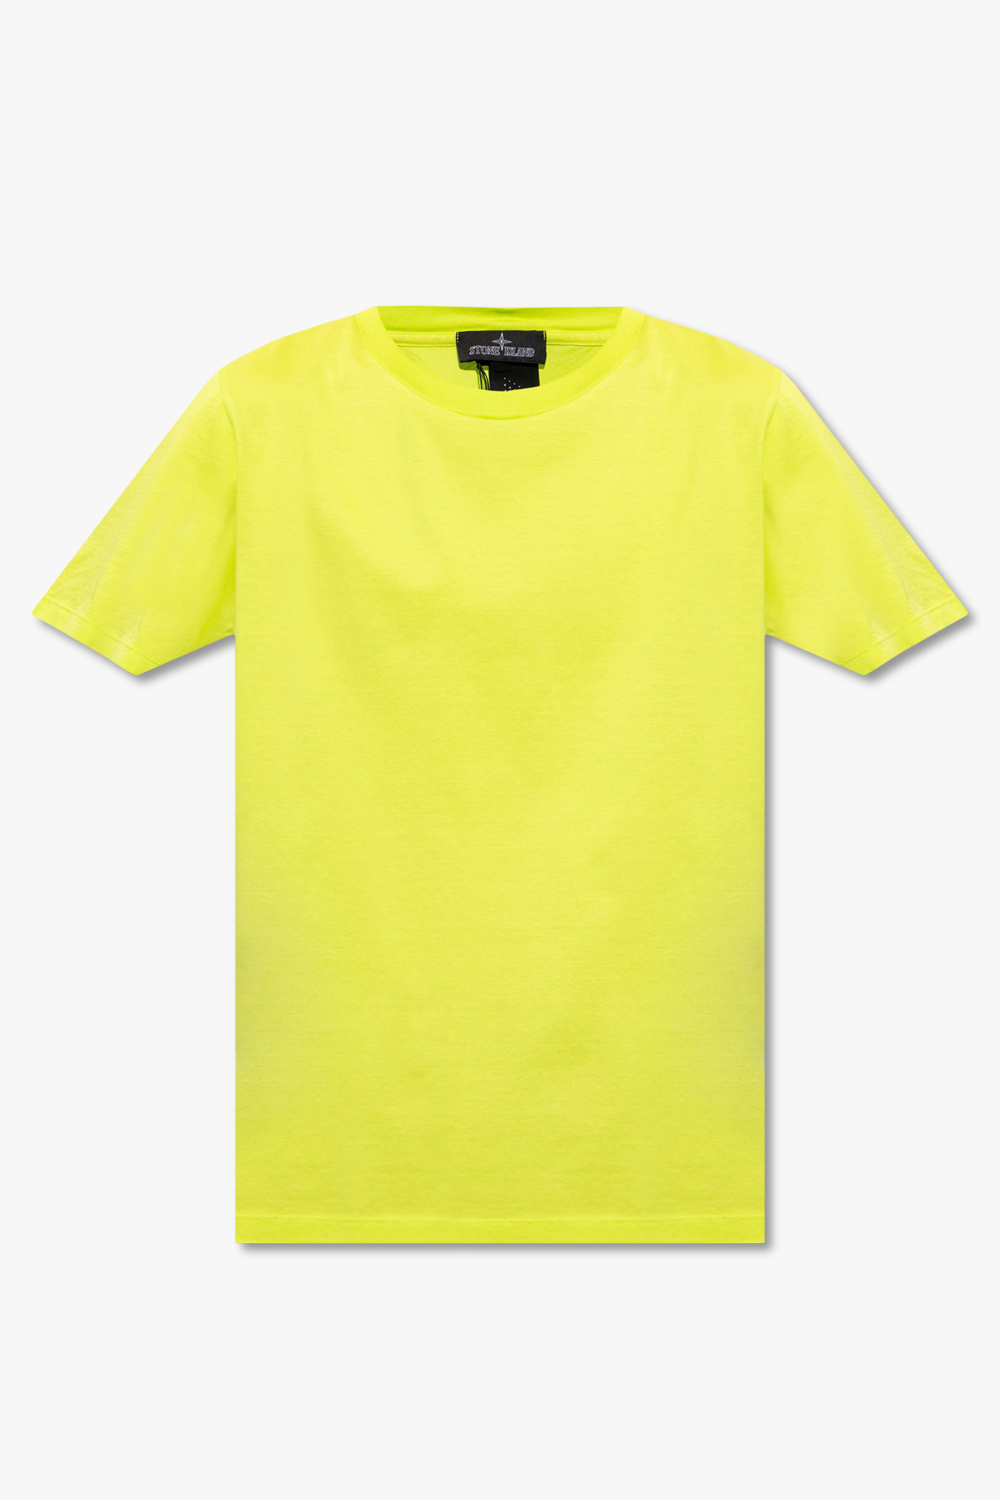 t-shirt rose de la marque okaidi - shirt Stone Island - Neon